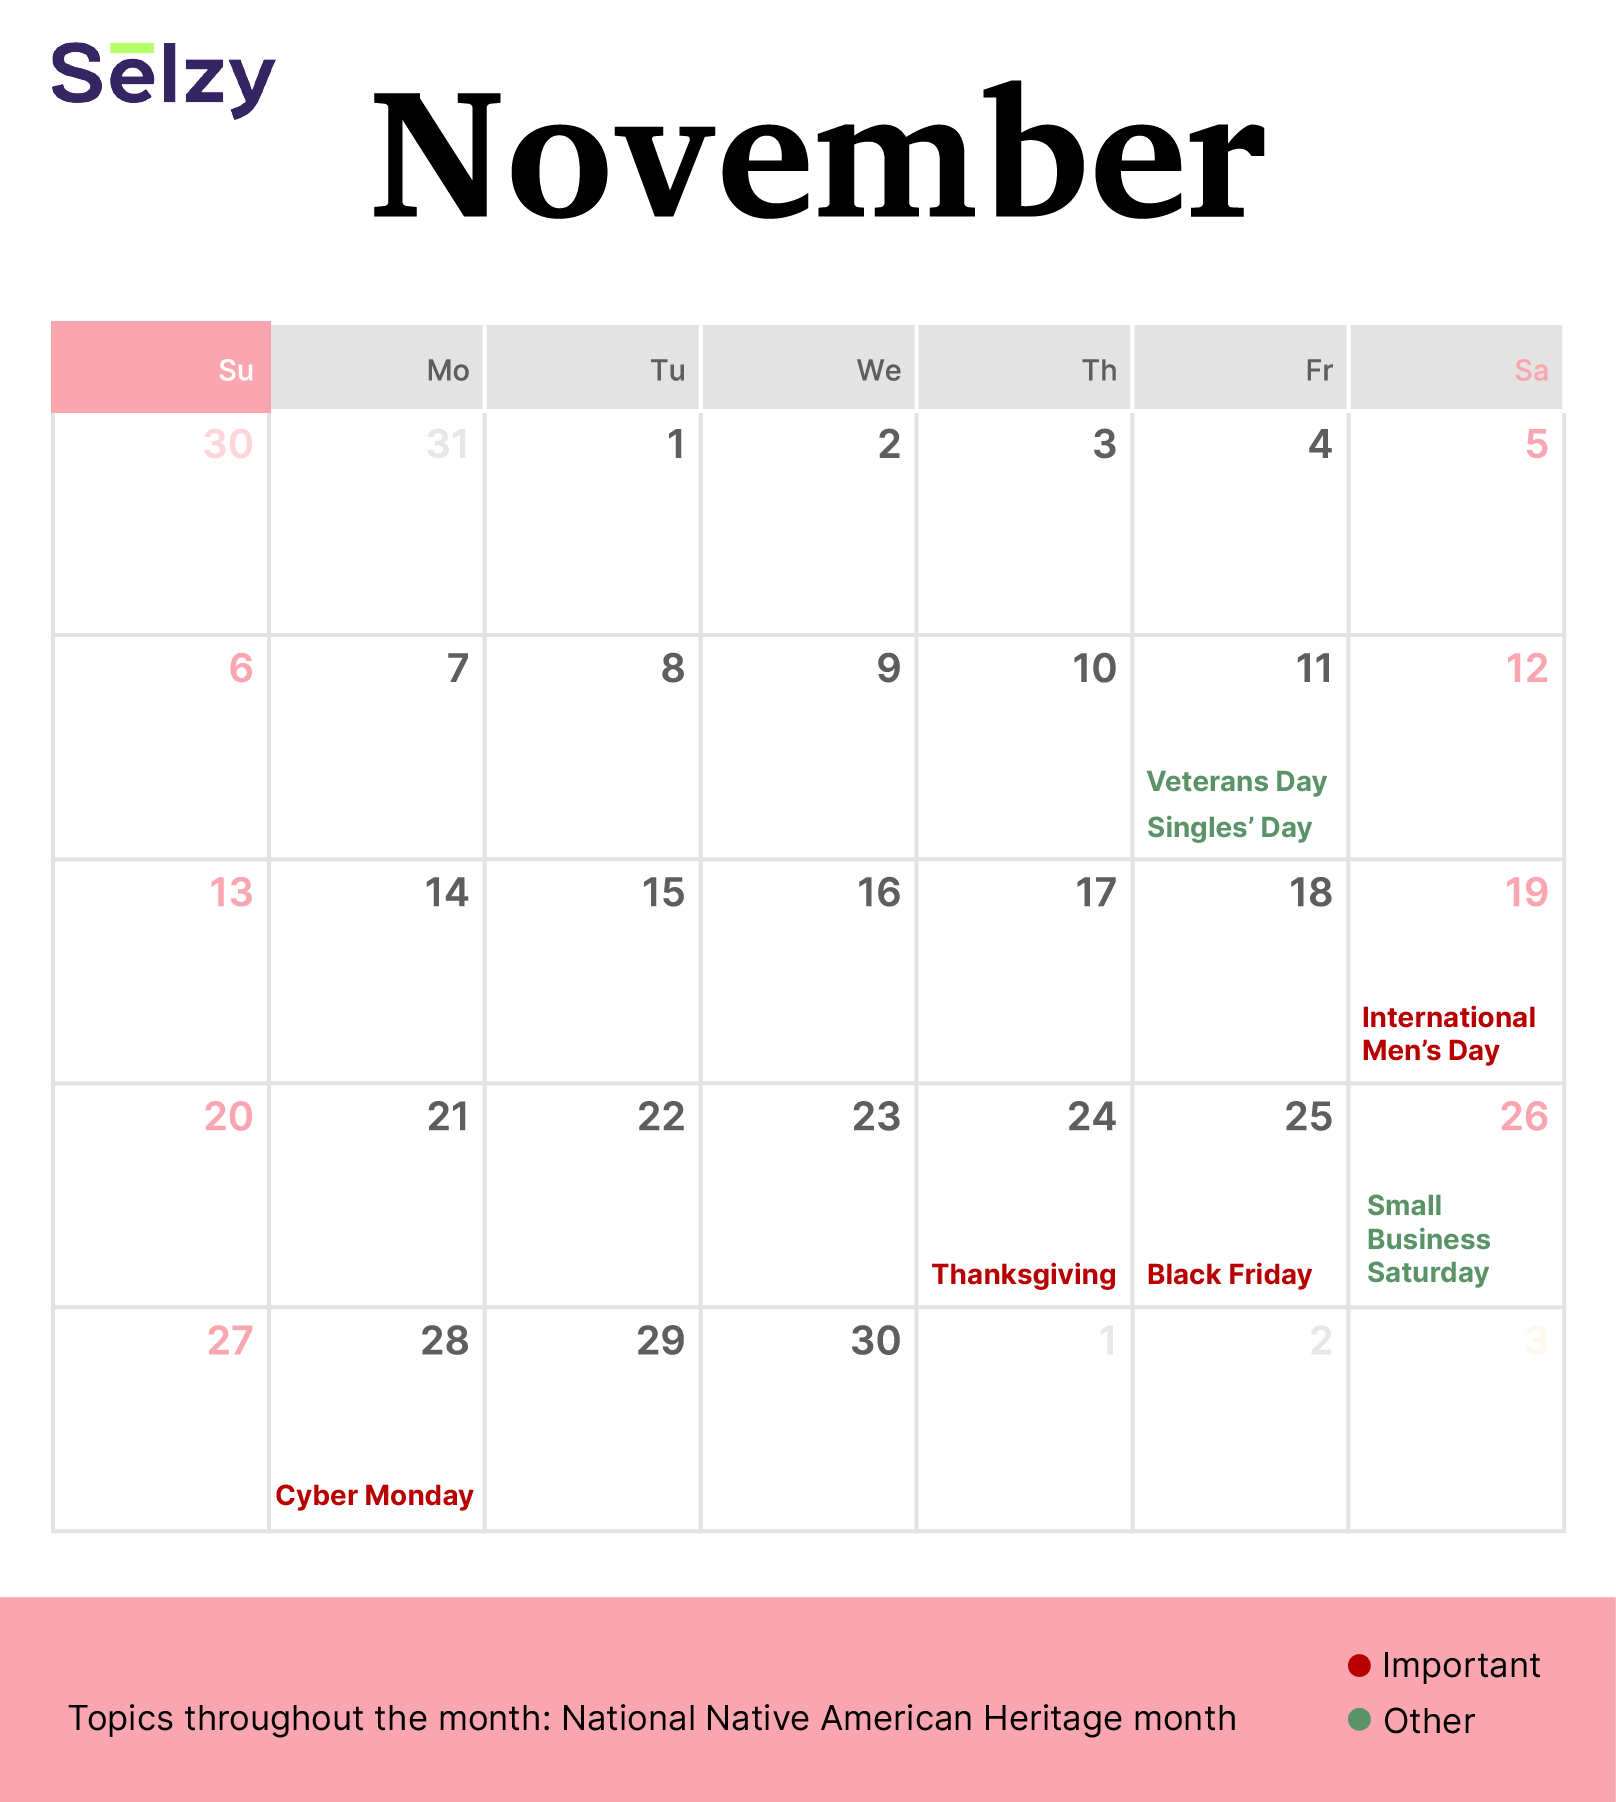 Holiday Marketing Calendar – November